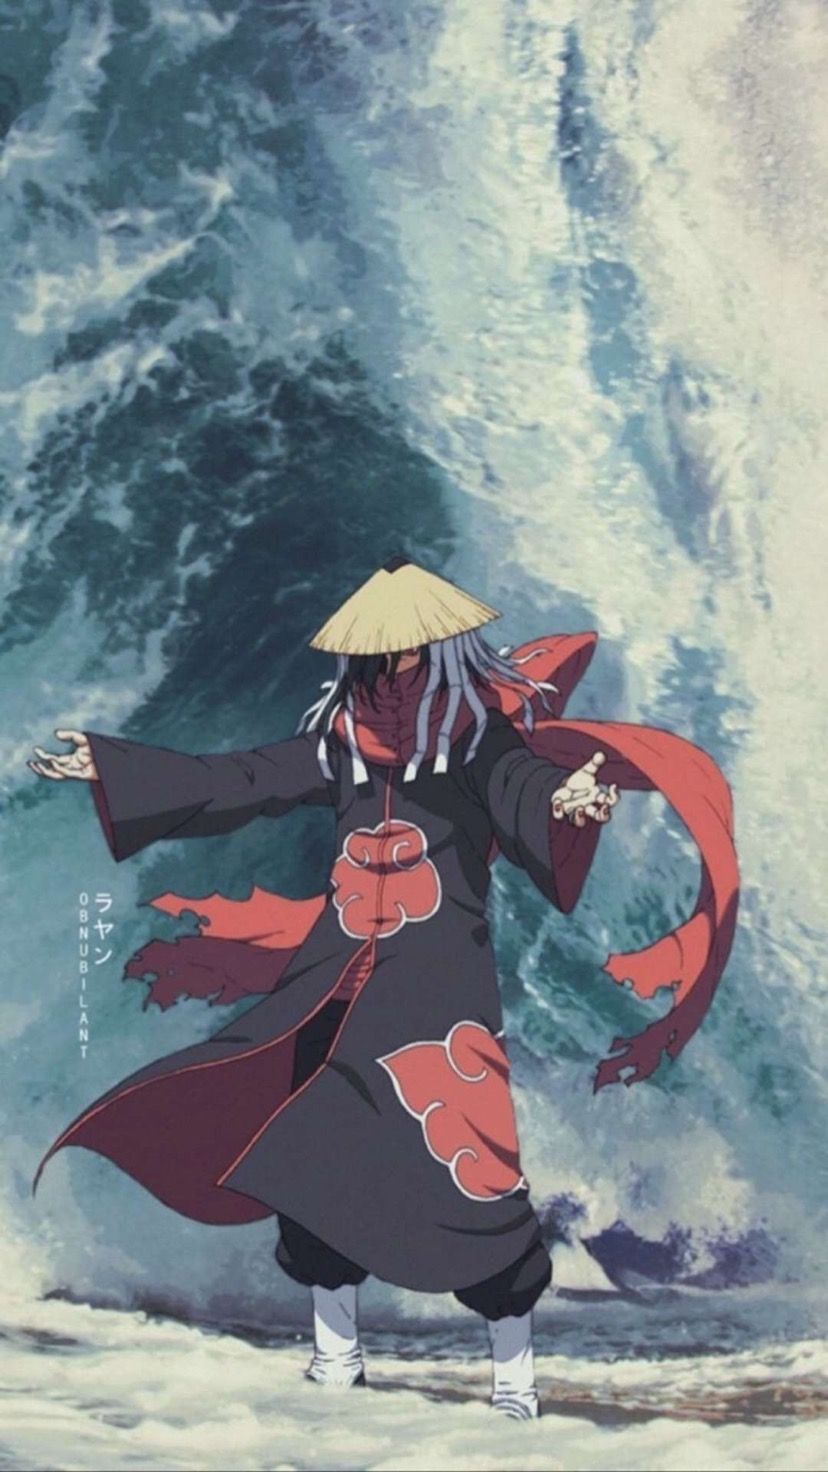 1000 images about naruto on Pinterest | Naruto shippuden, Naruto ... - Obito Uchiha